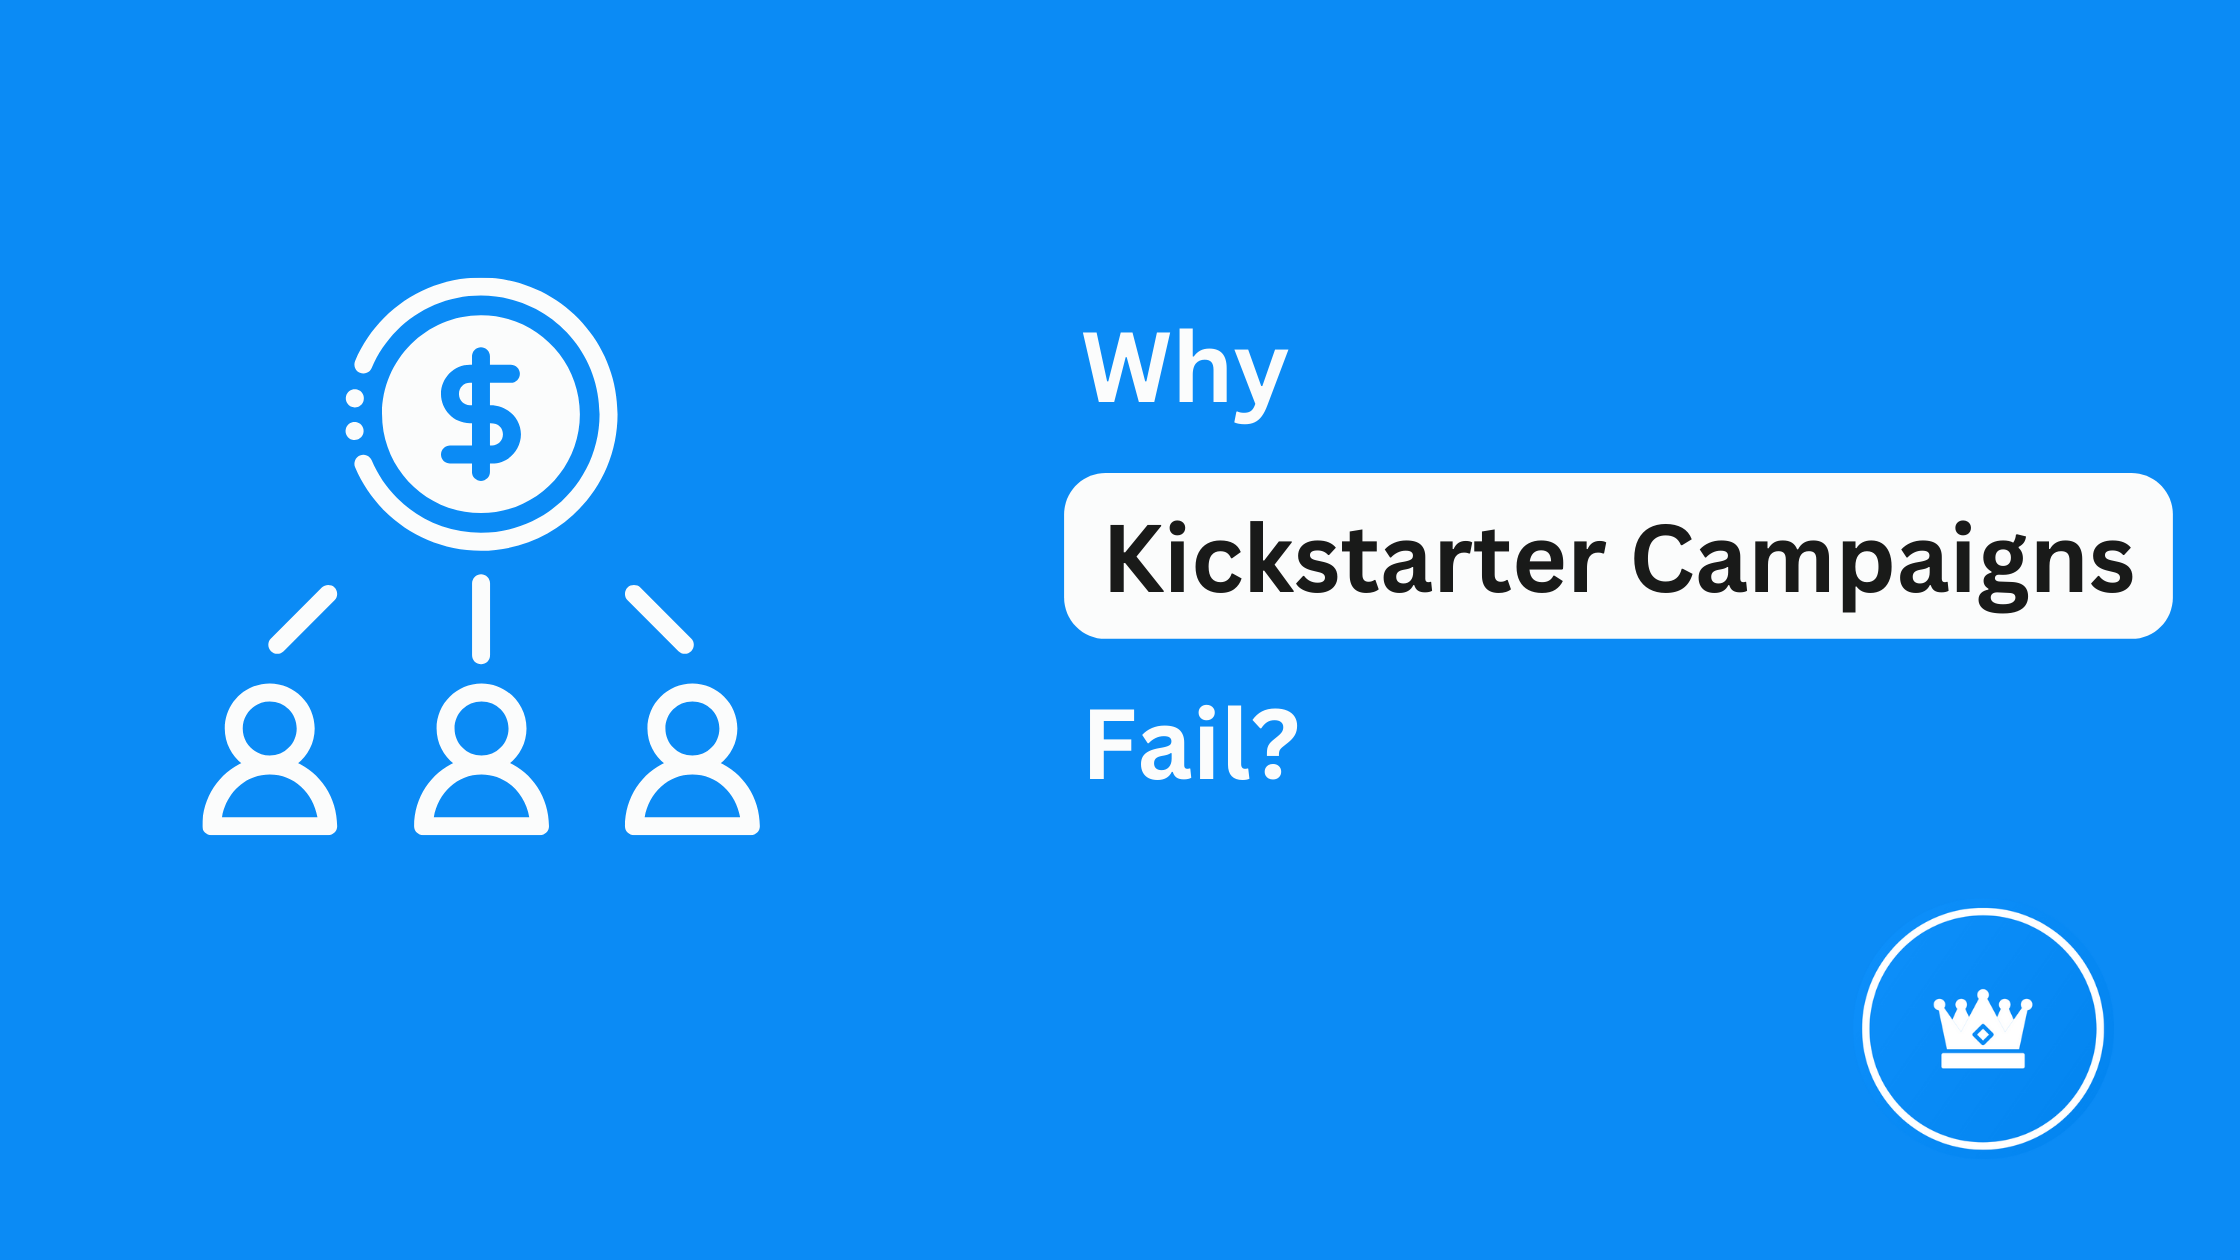 Why Do Kickstarter Cmapign Fails? The reason behind kickstarter campaign failure. 